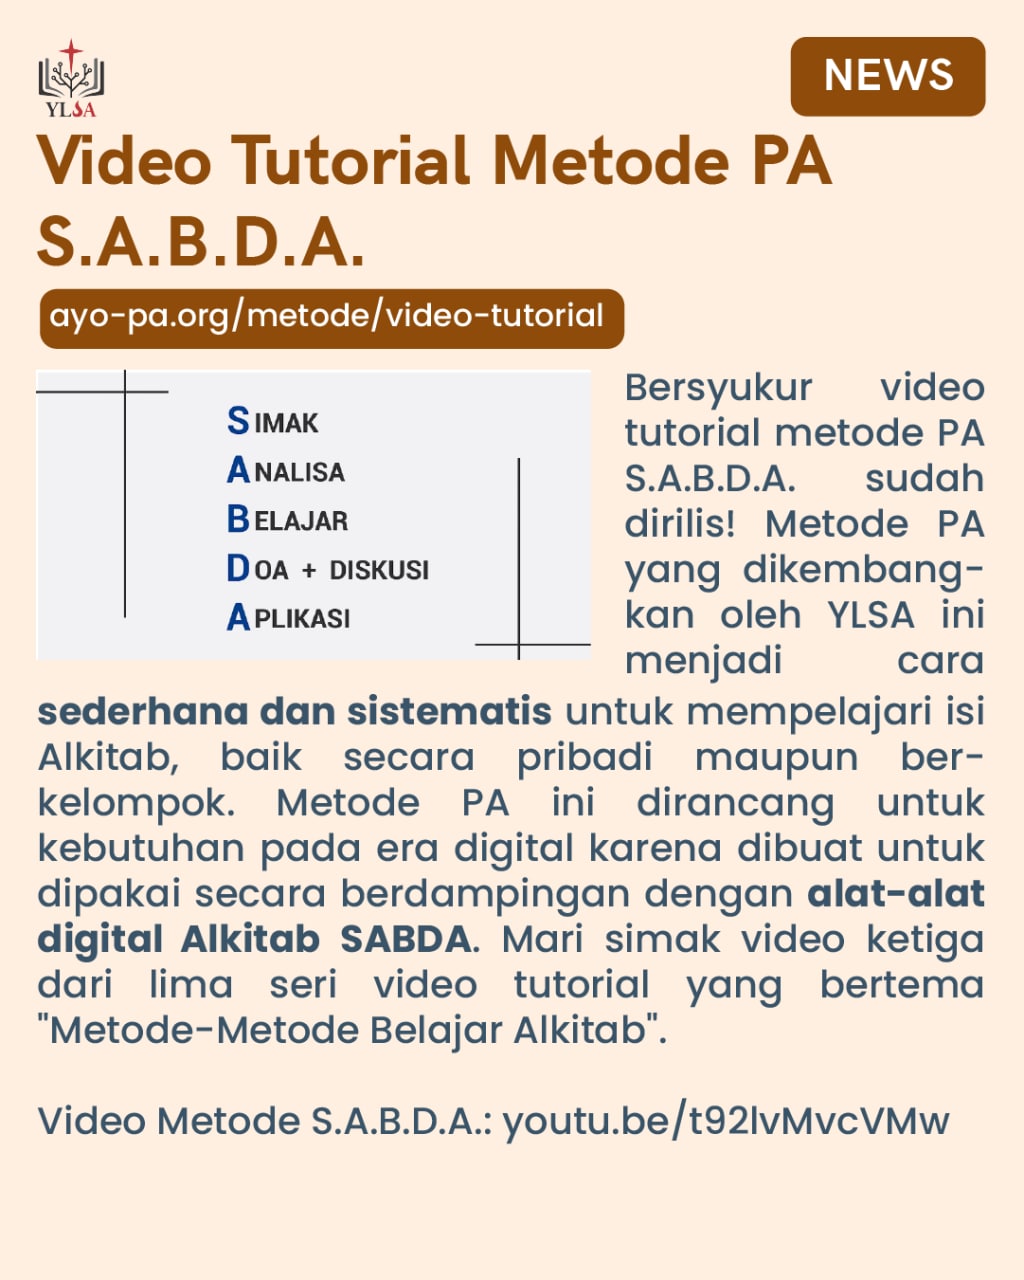 Video tutorial metode PA S.A.B.D.A. sudah rilis!